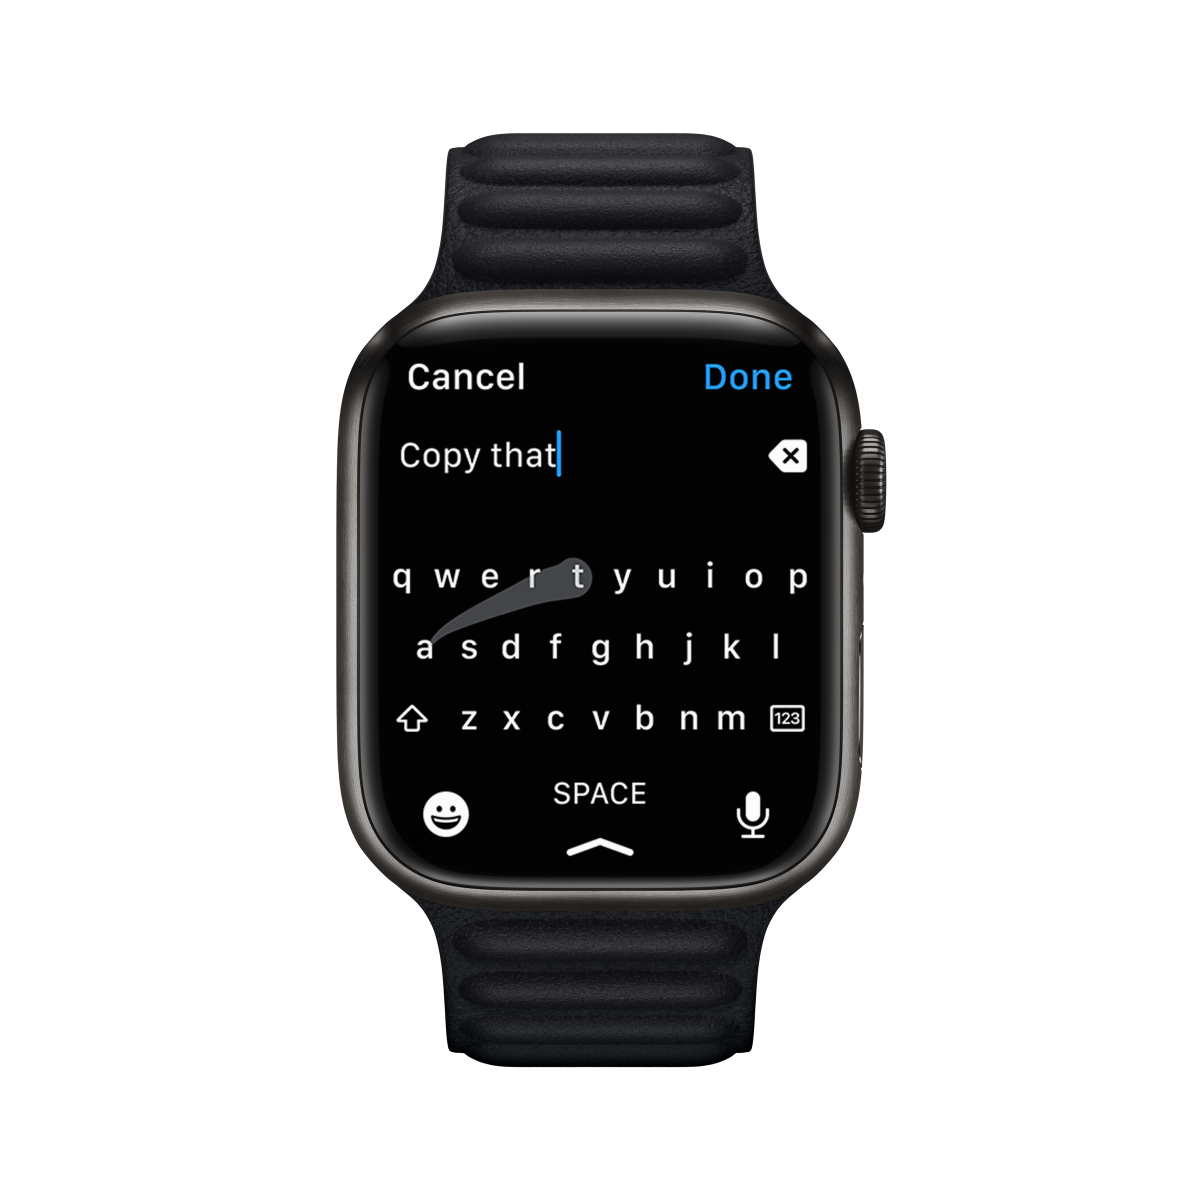 Apple Watch Series 7 2021 秋季 iPhone 發表會